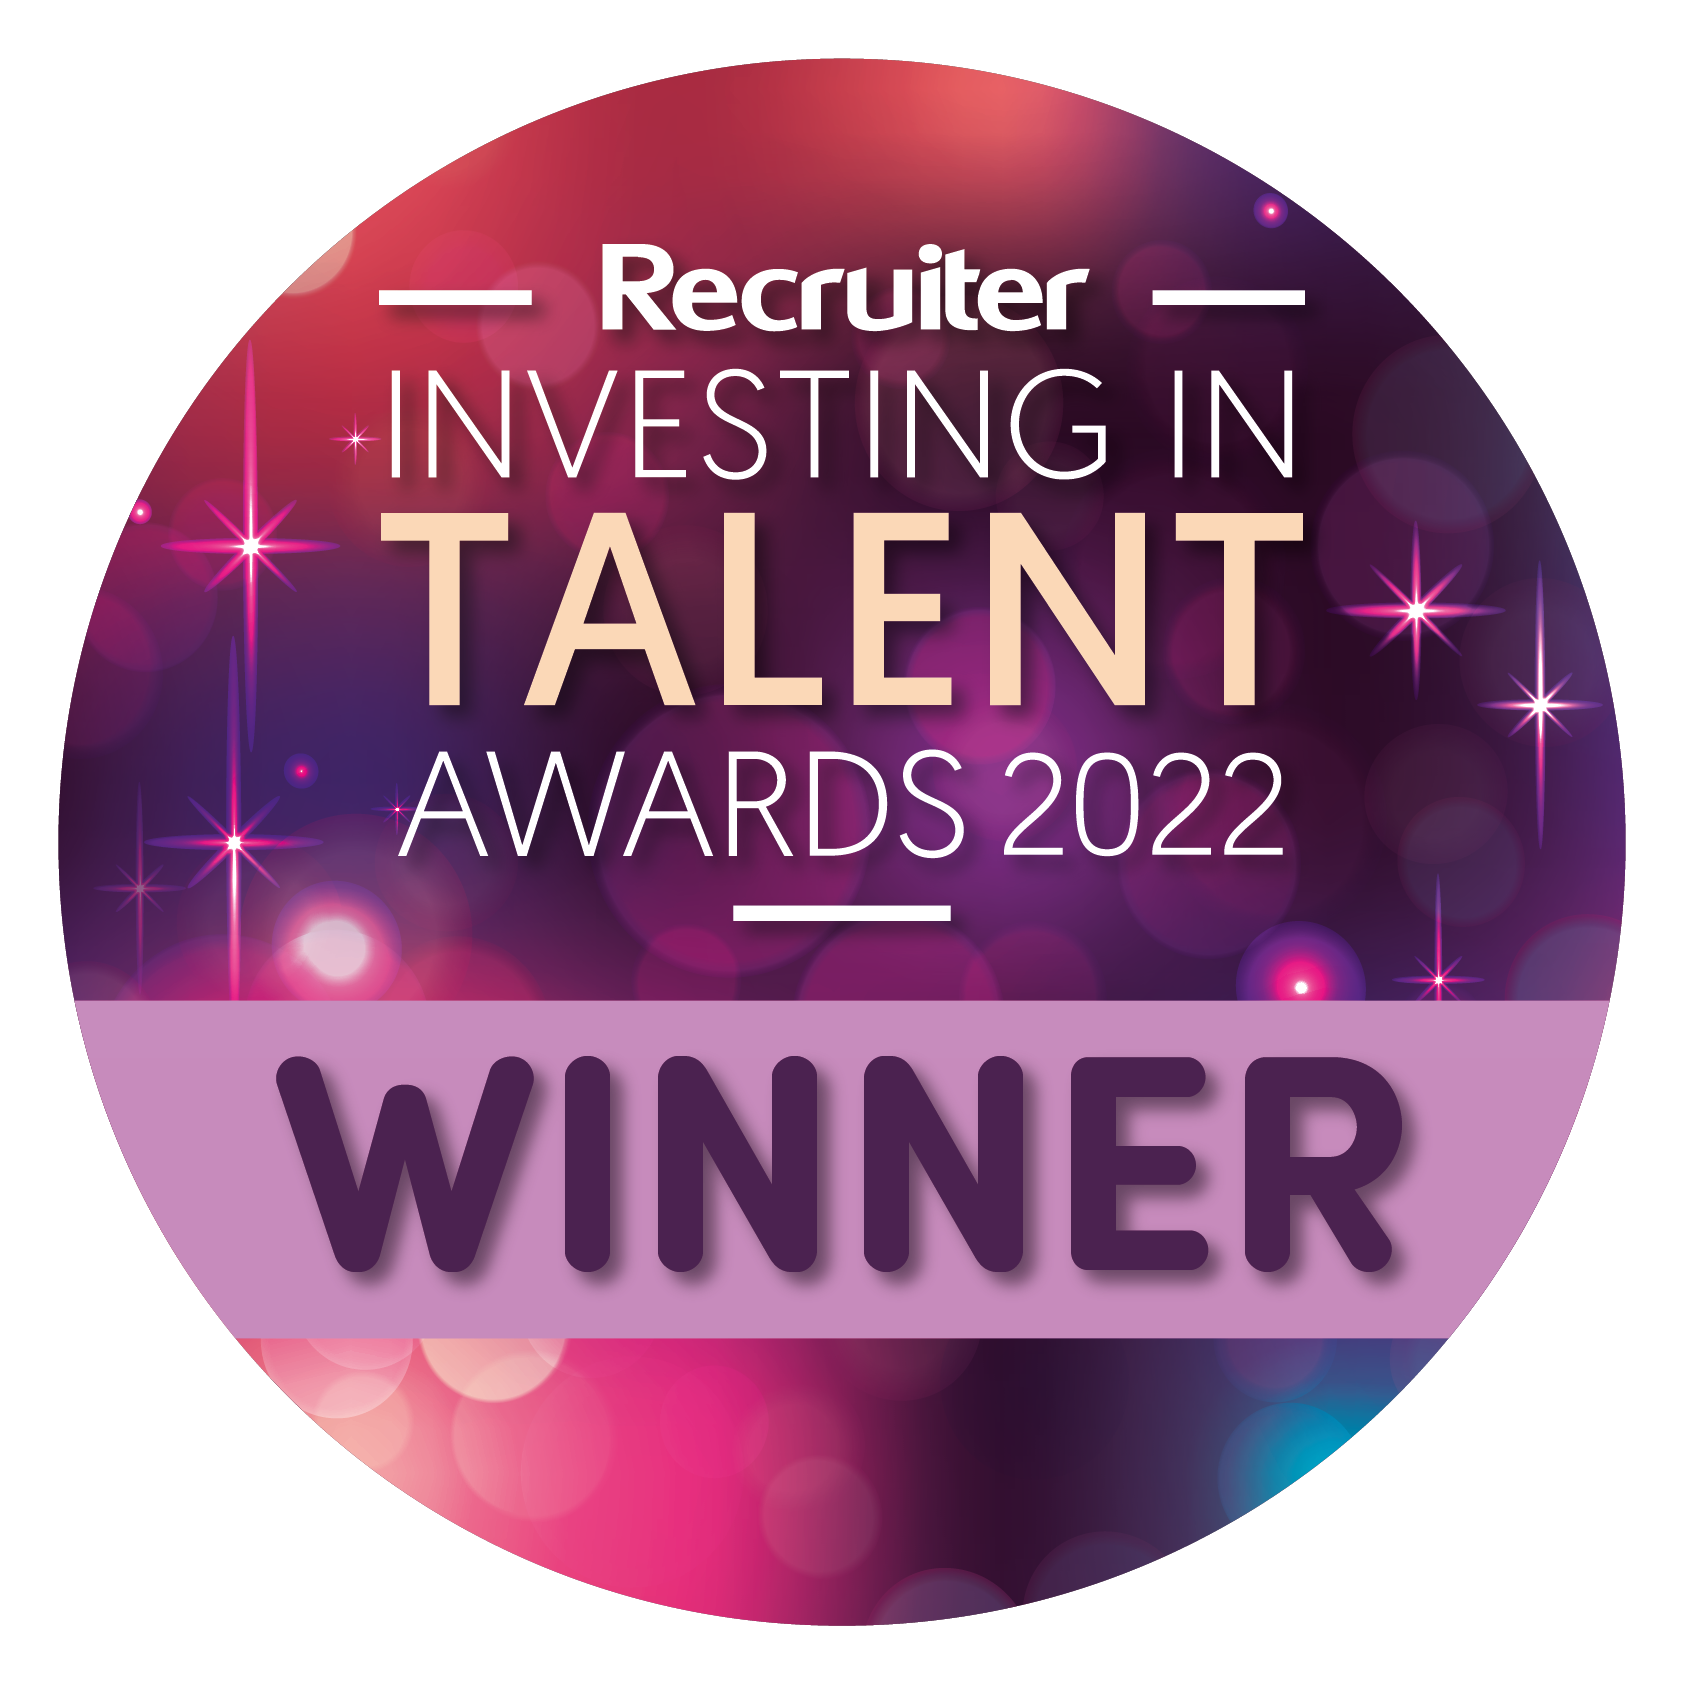 Recruiter Investing in Talent winner badge 2022 